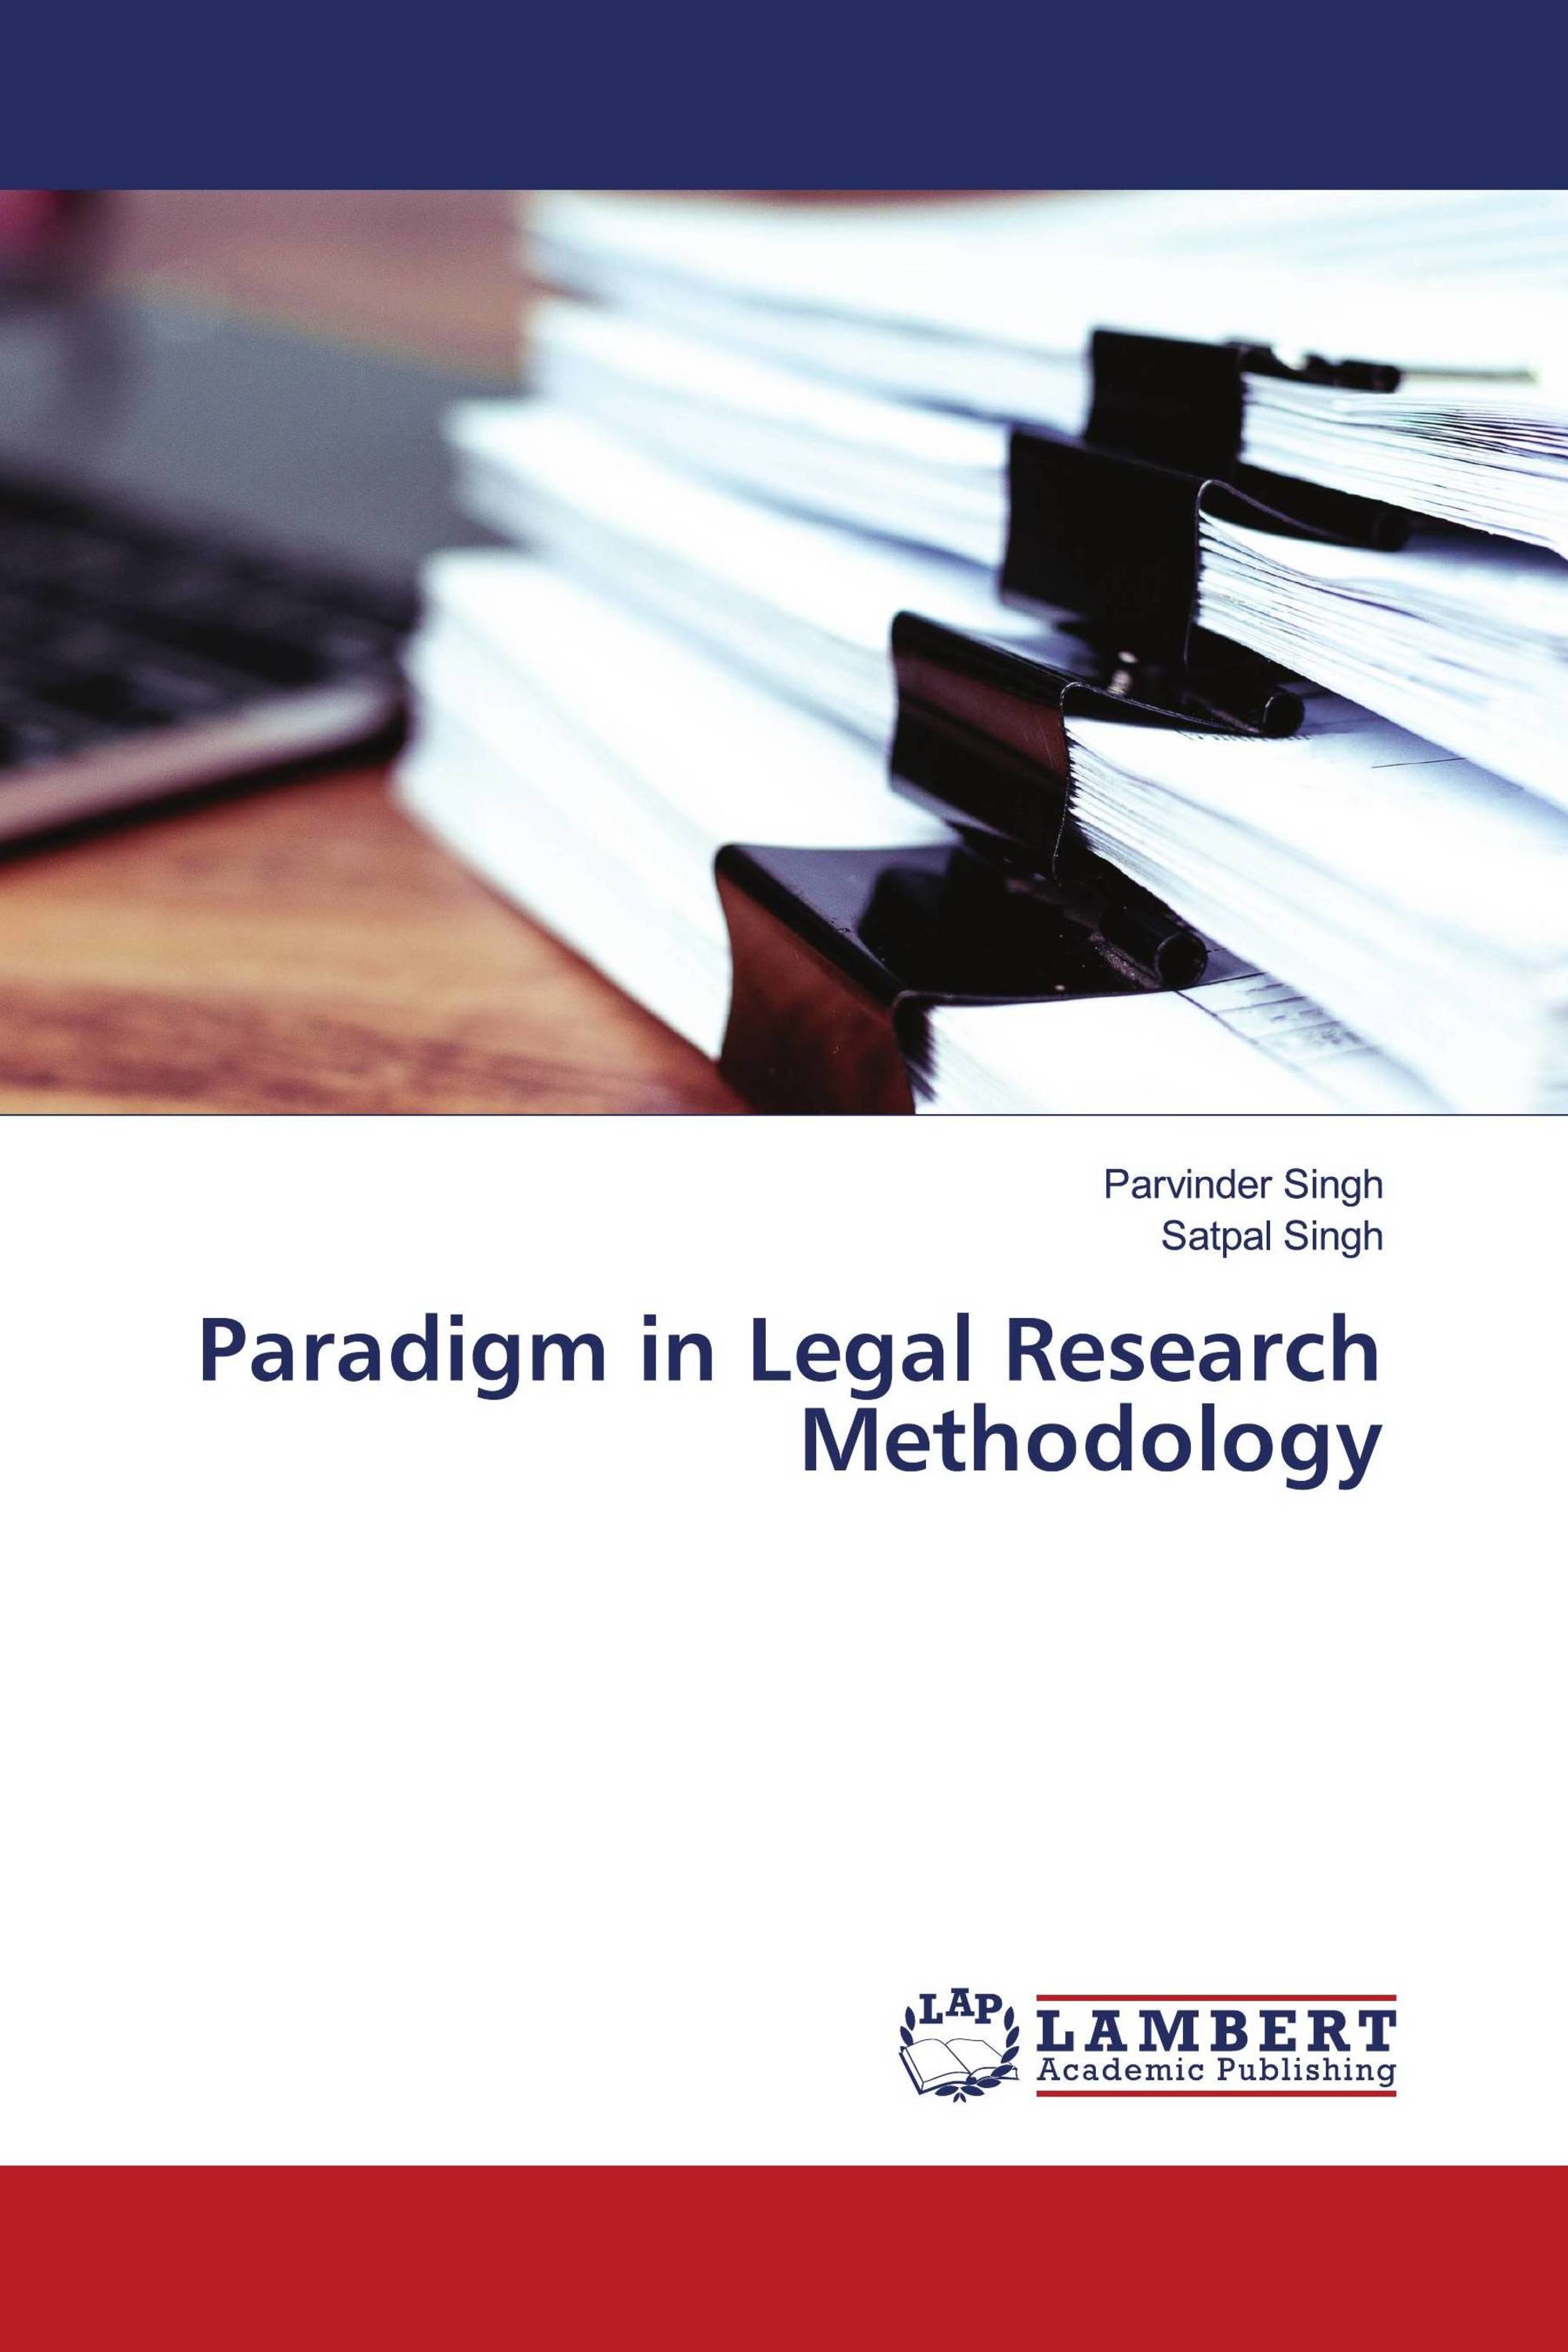 methodology legal research